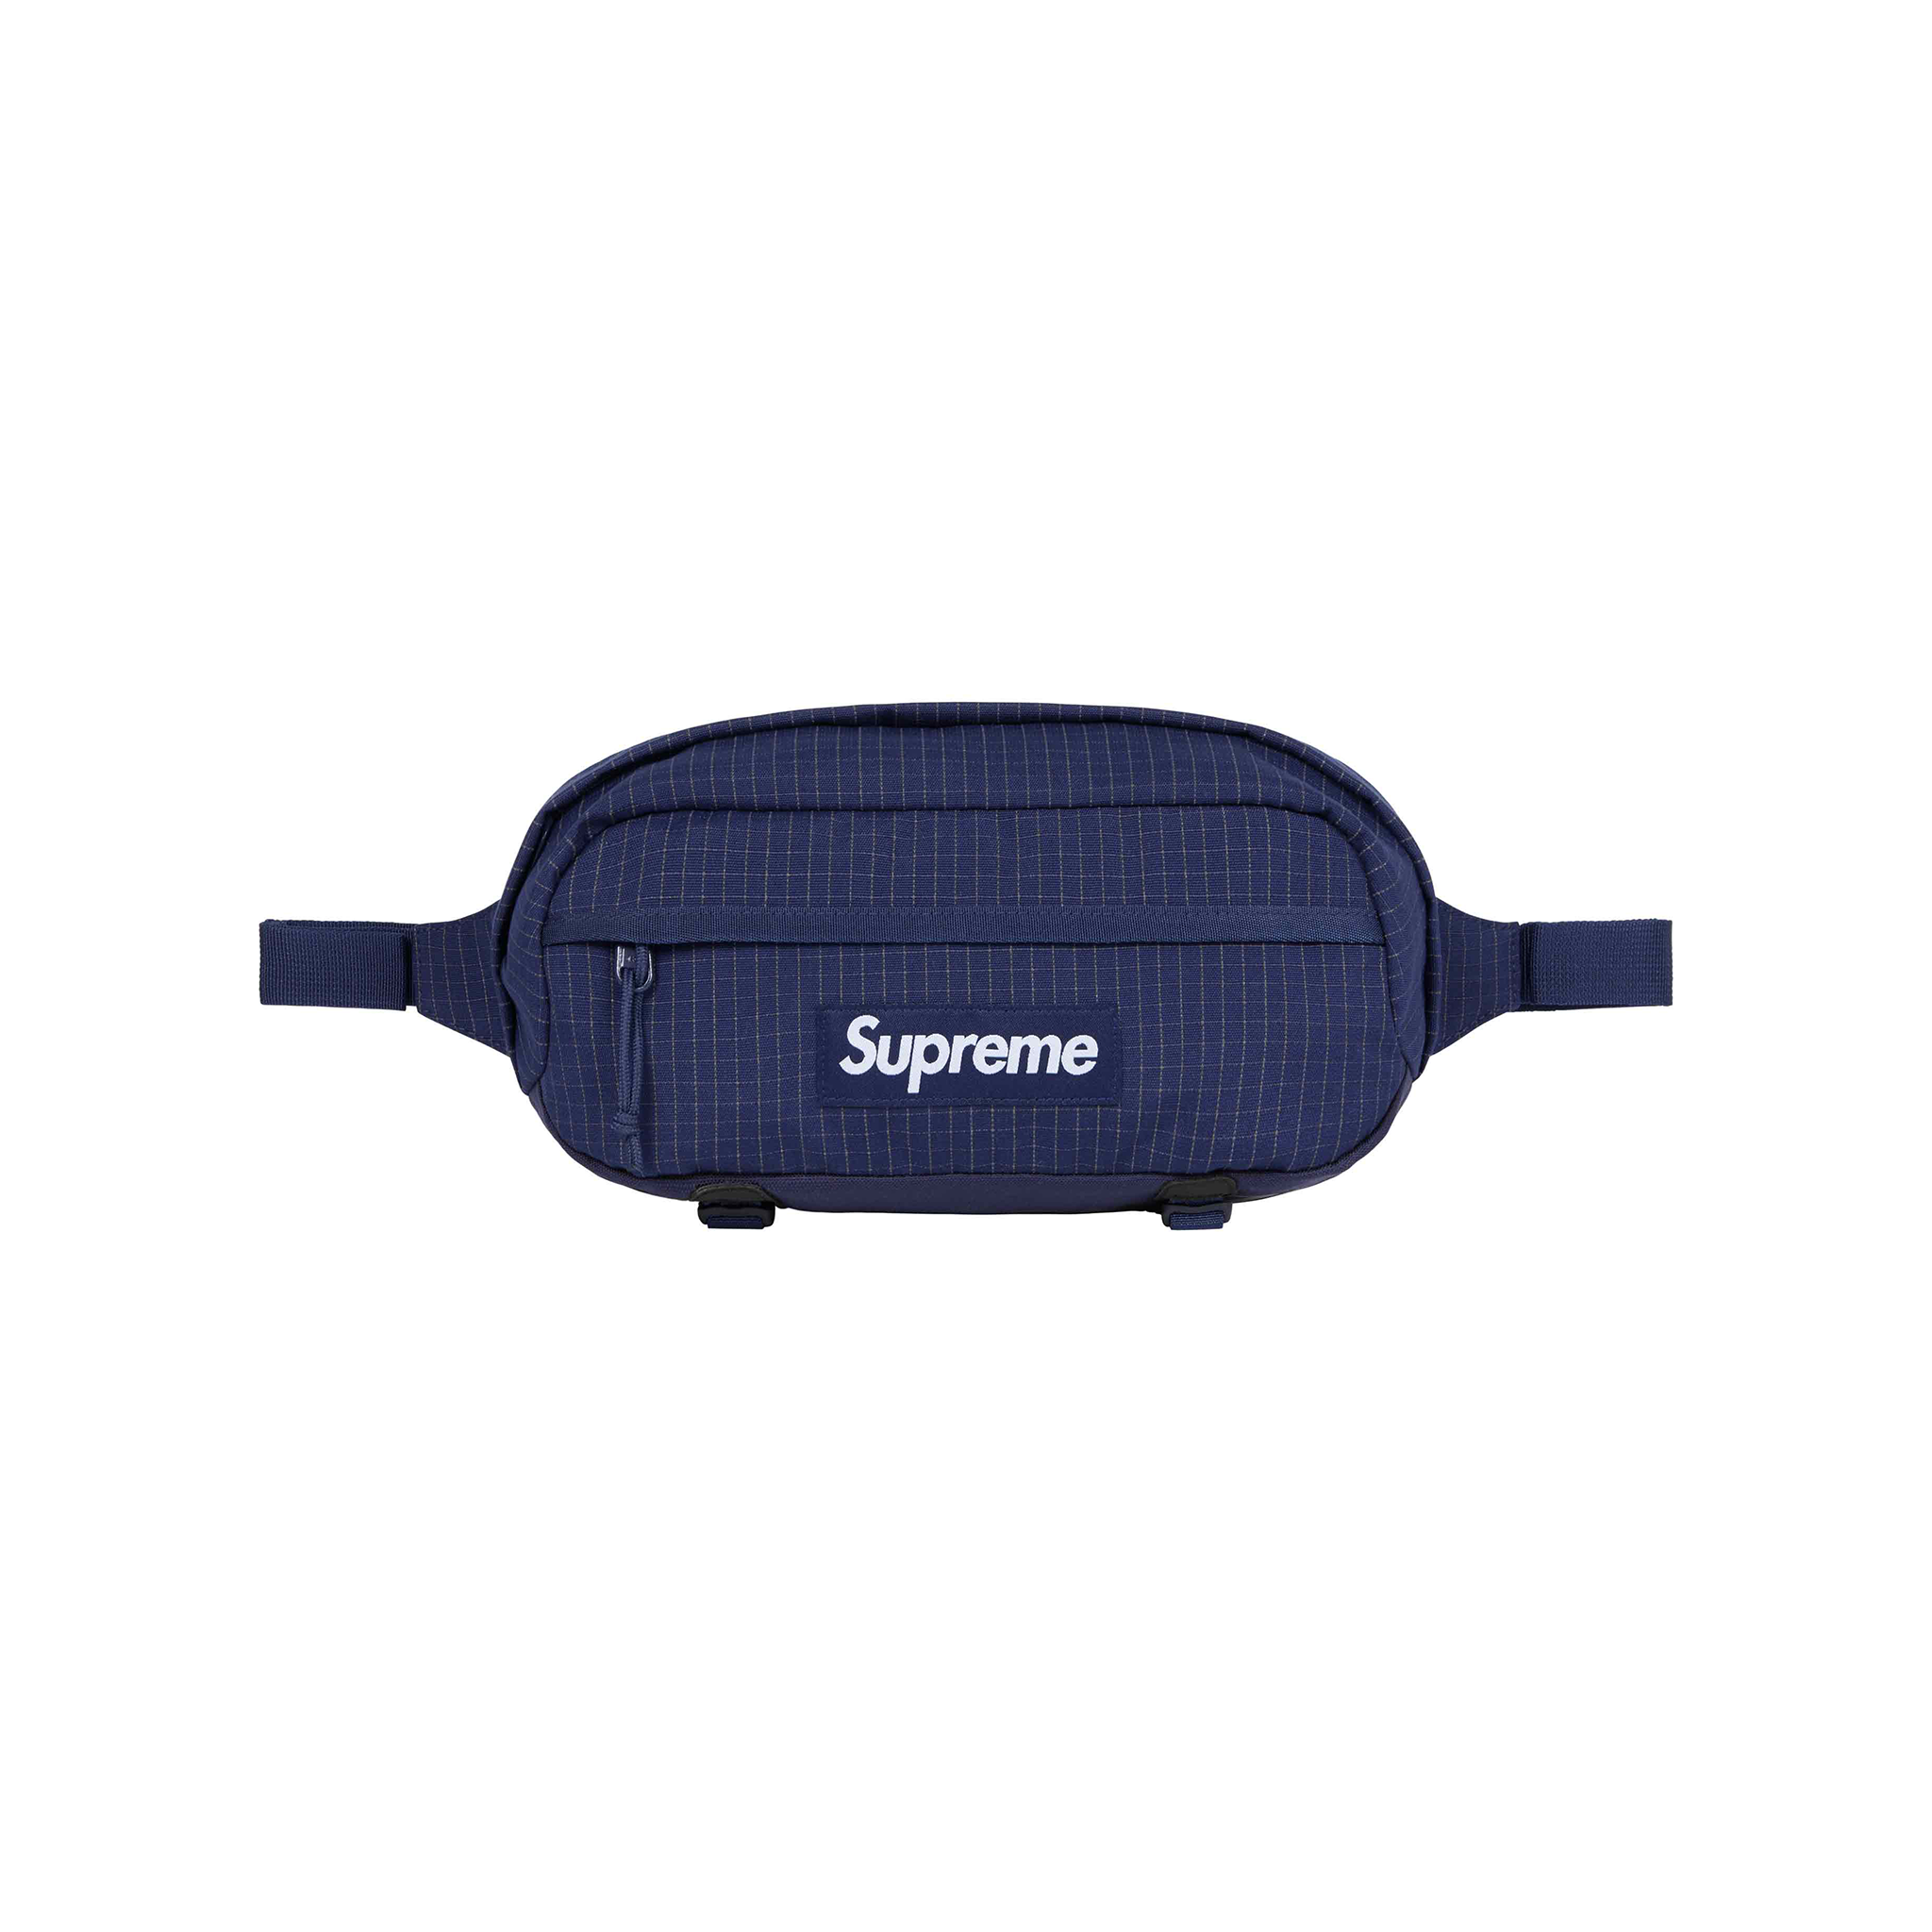 Ss20 Supreme Waist Bag Black 100 Authentic for sale online | eBay